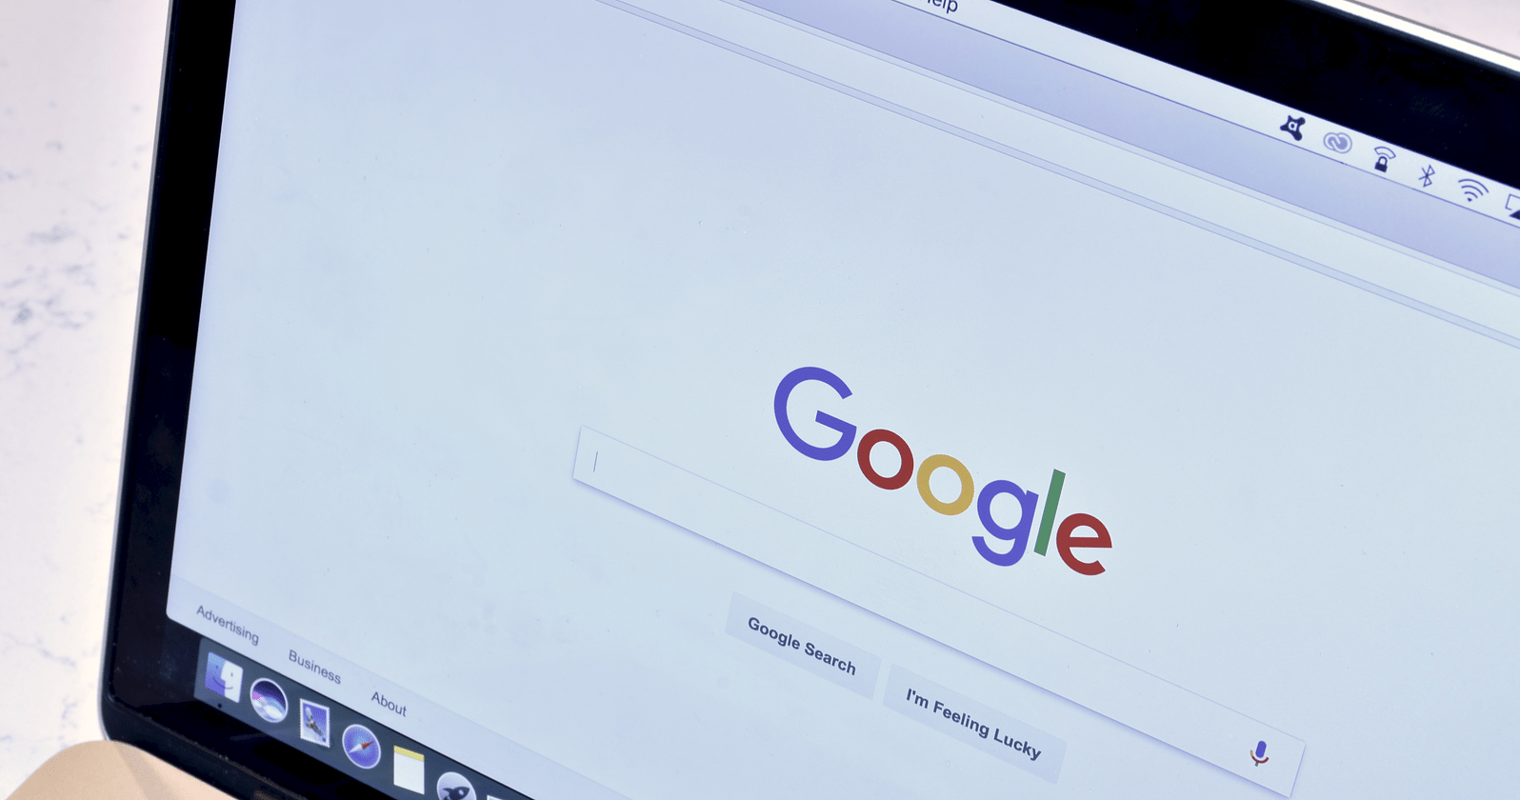 Google Tests New Design for Desktop Search Results